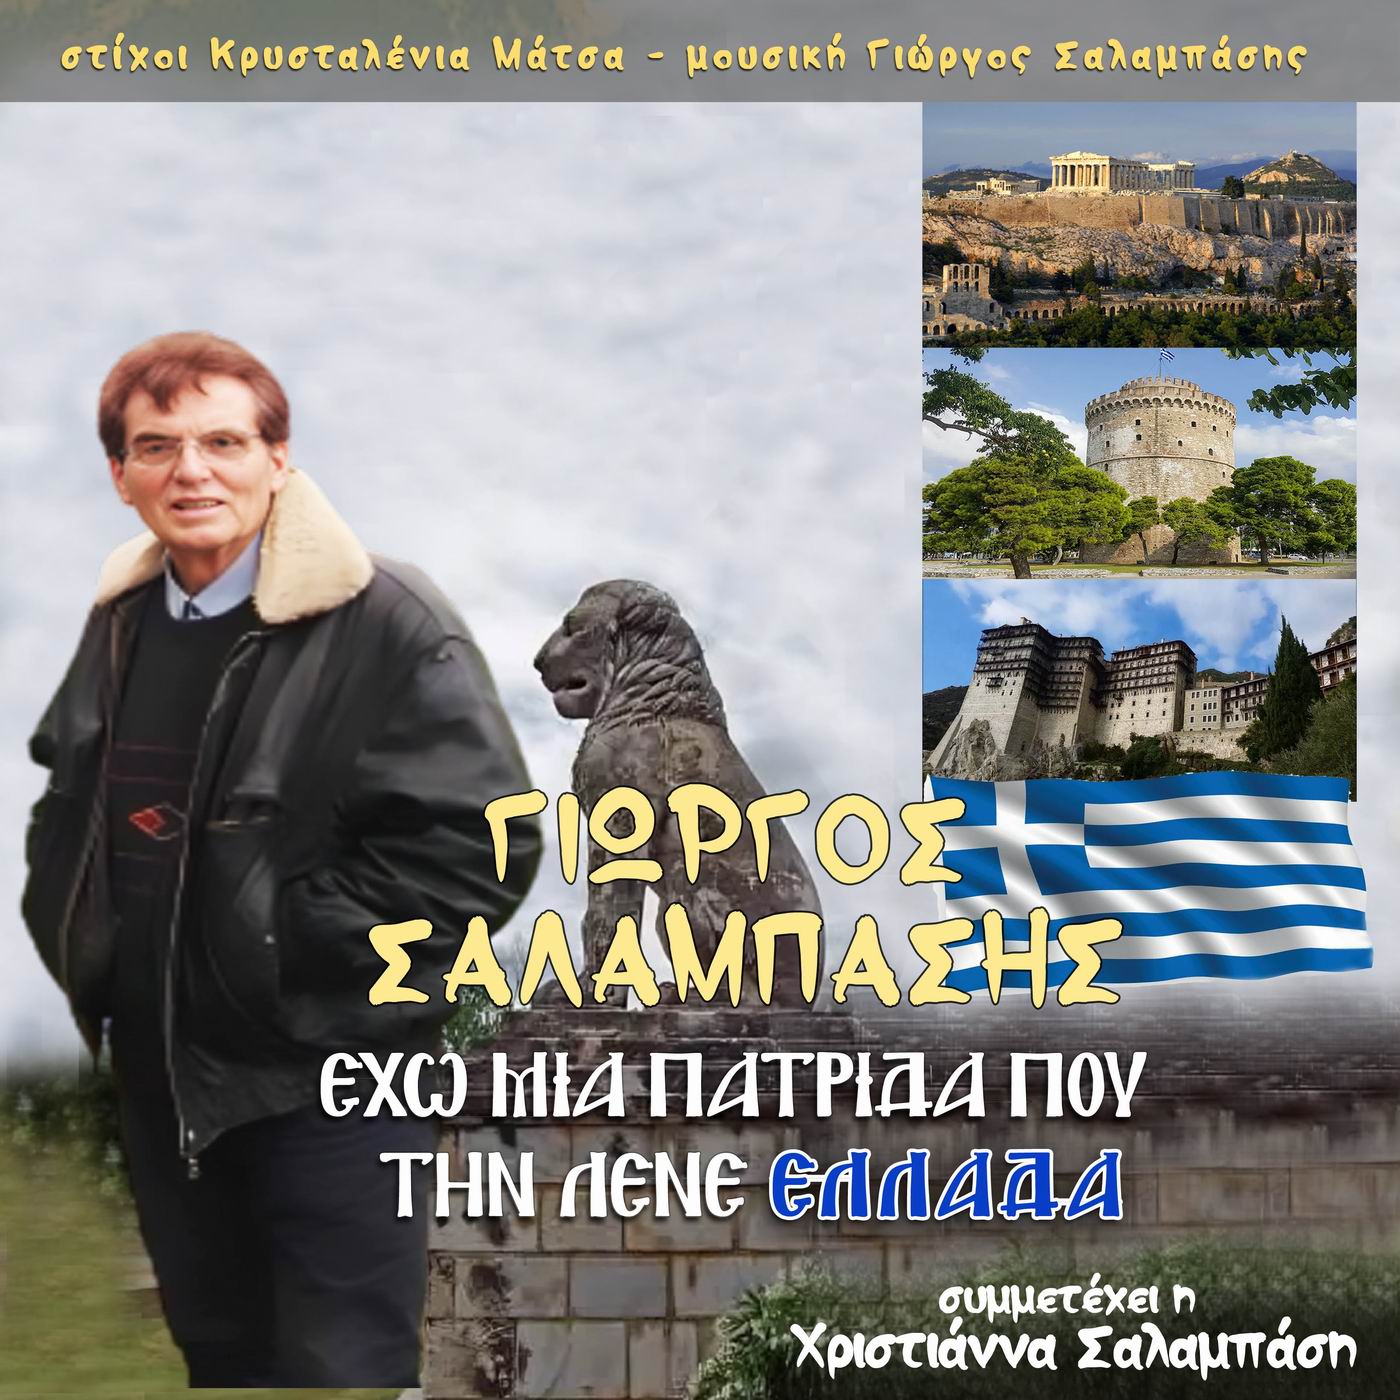 Music Liberty-Γιώργος Σαλαμπάσης- «Έχω μια πατρίδα που την λένε Ελλάδα»